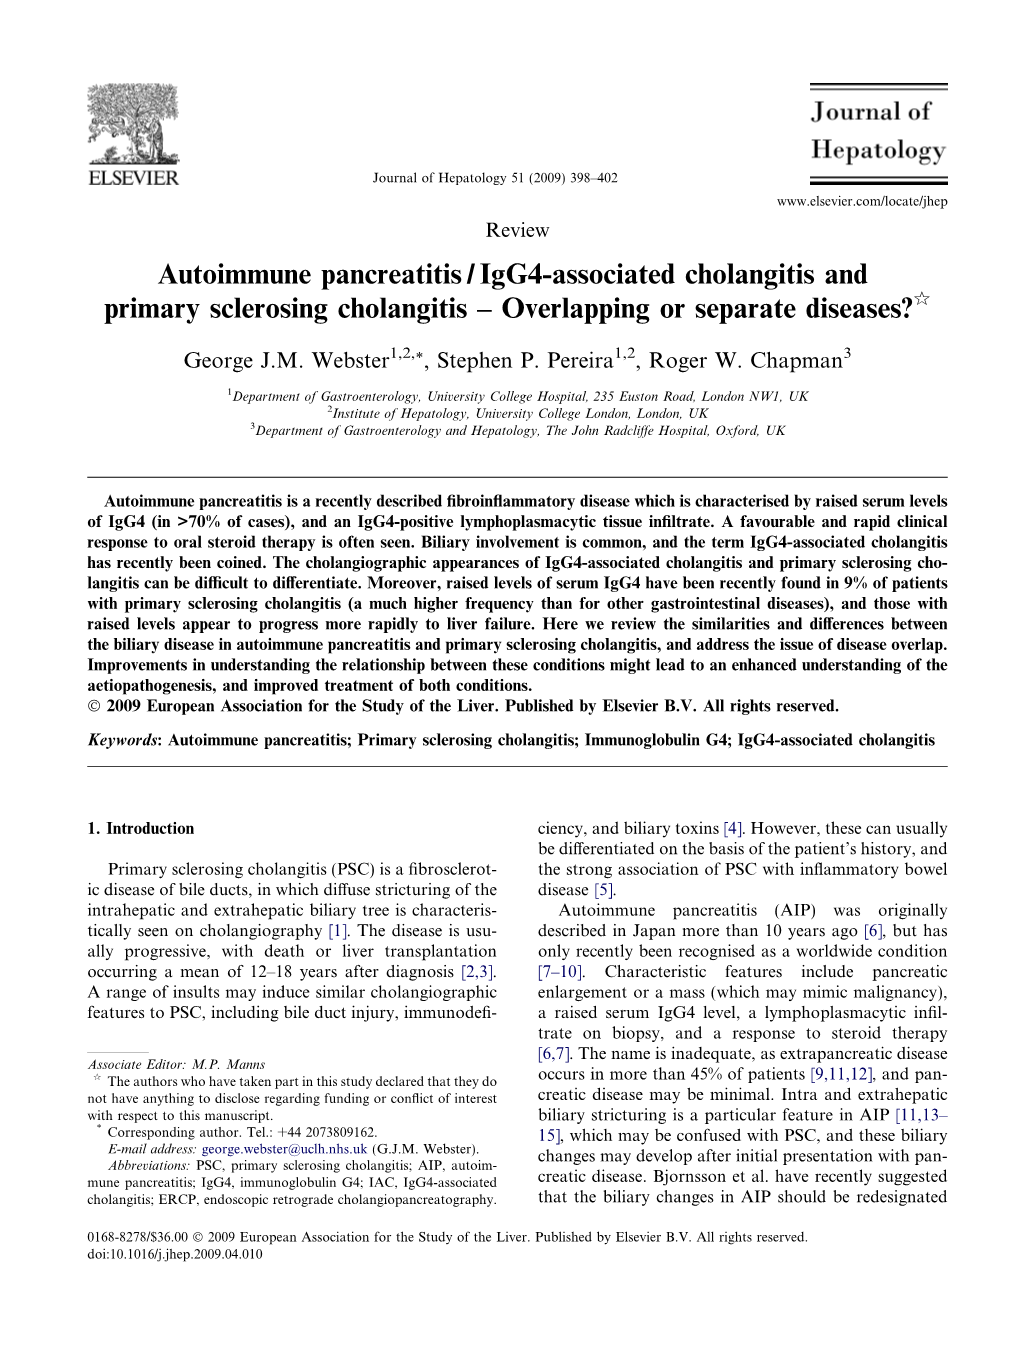 Autoimmune Pancreatitis/Igg4-Associated Cholangitis